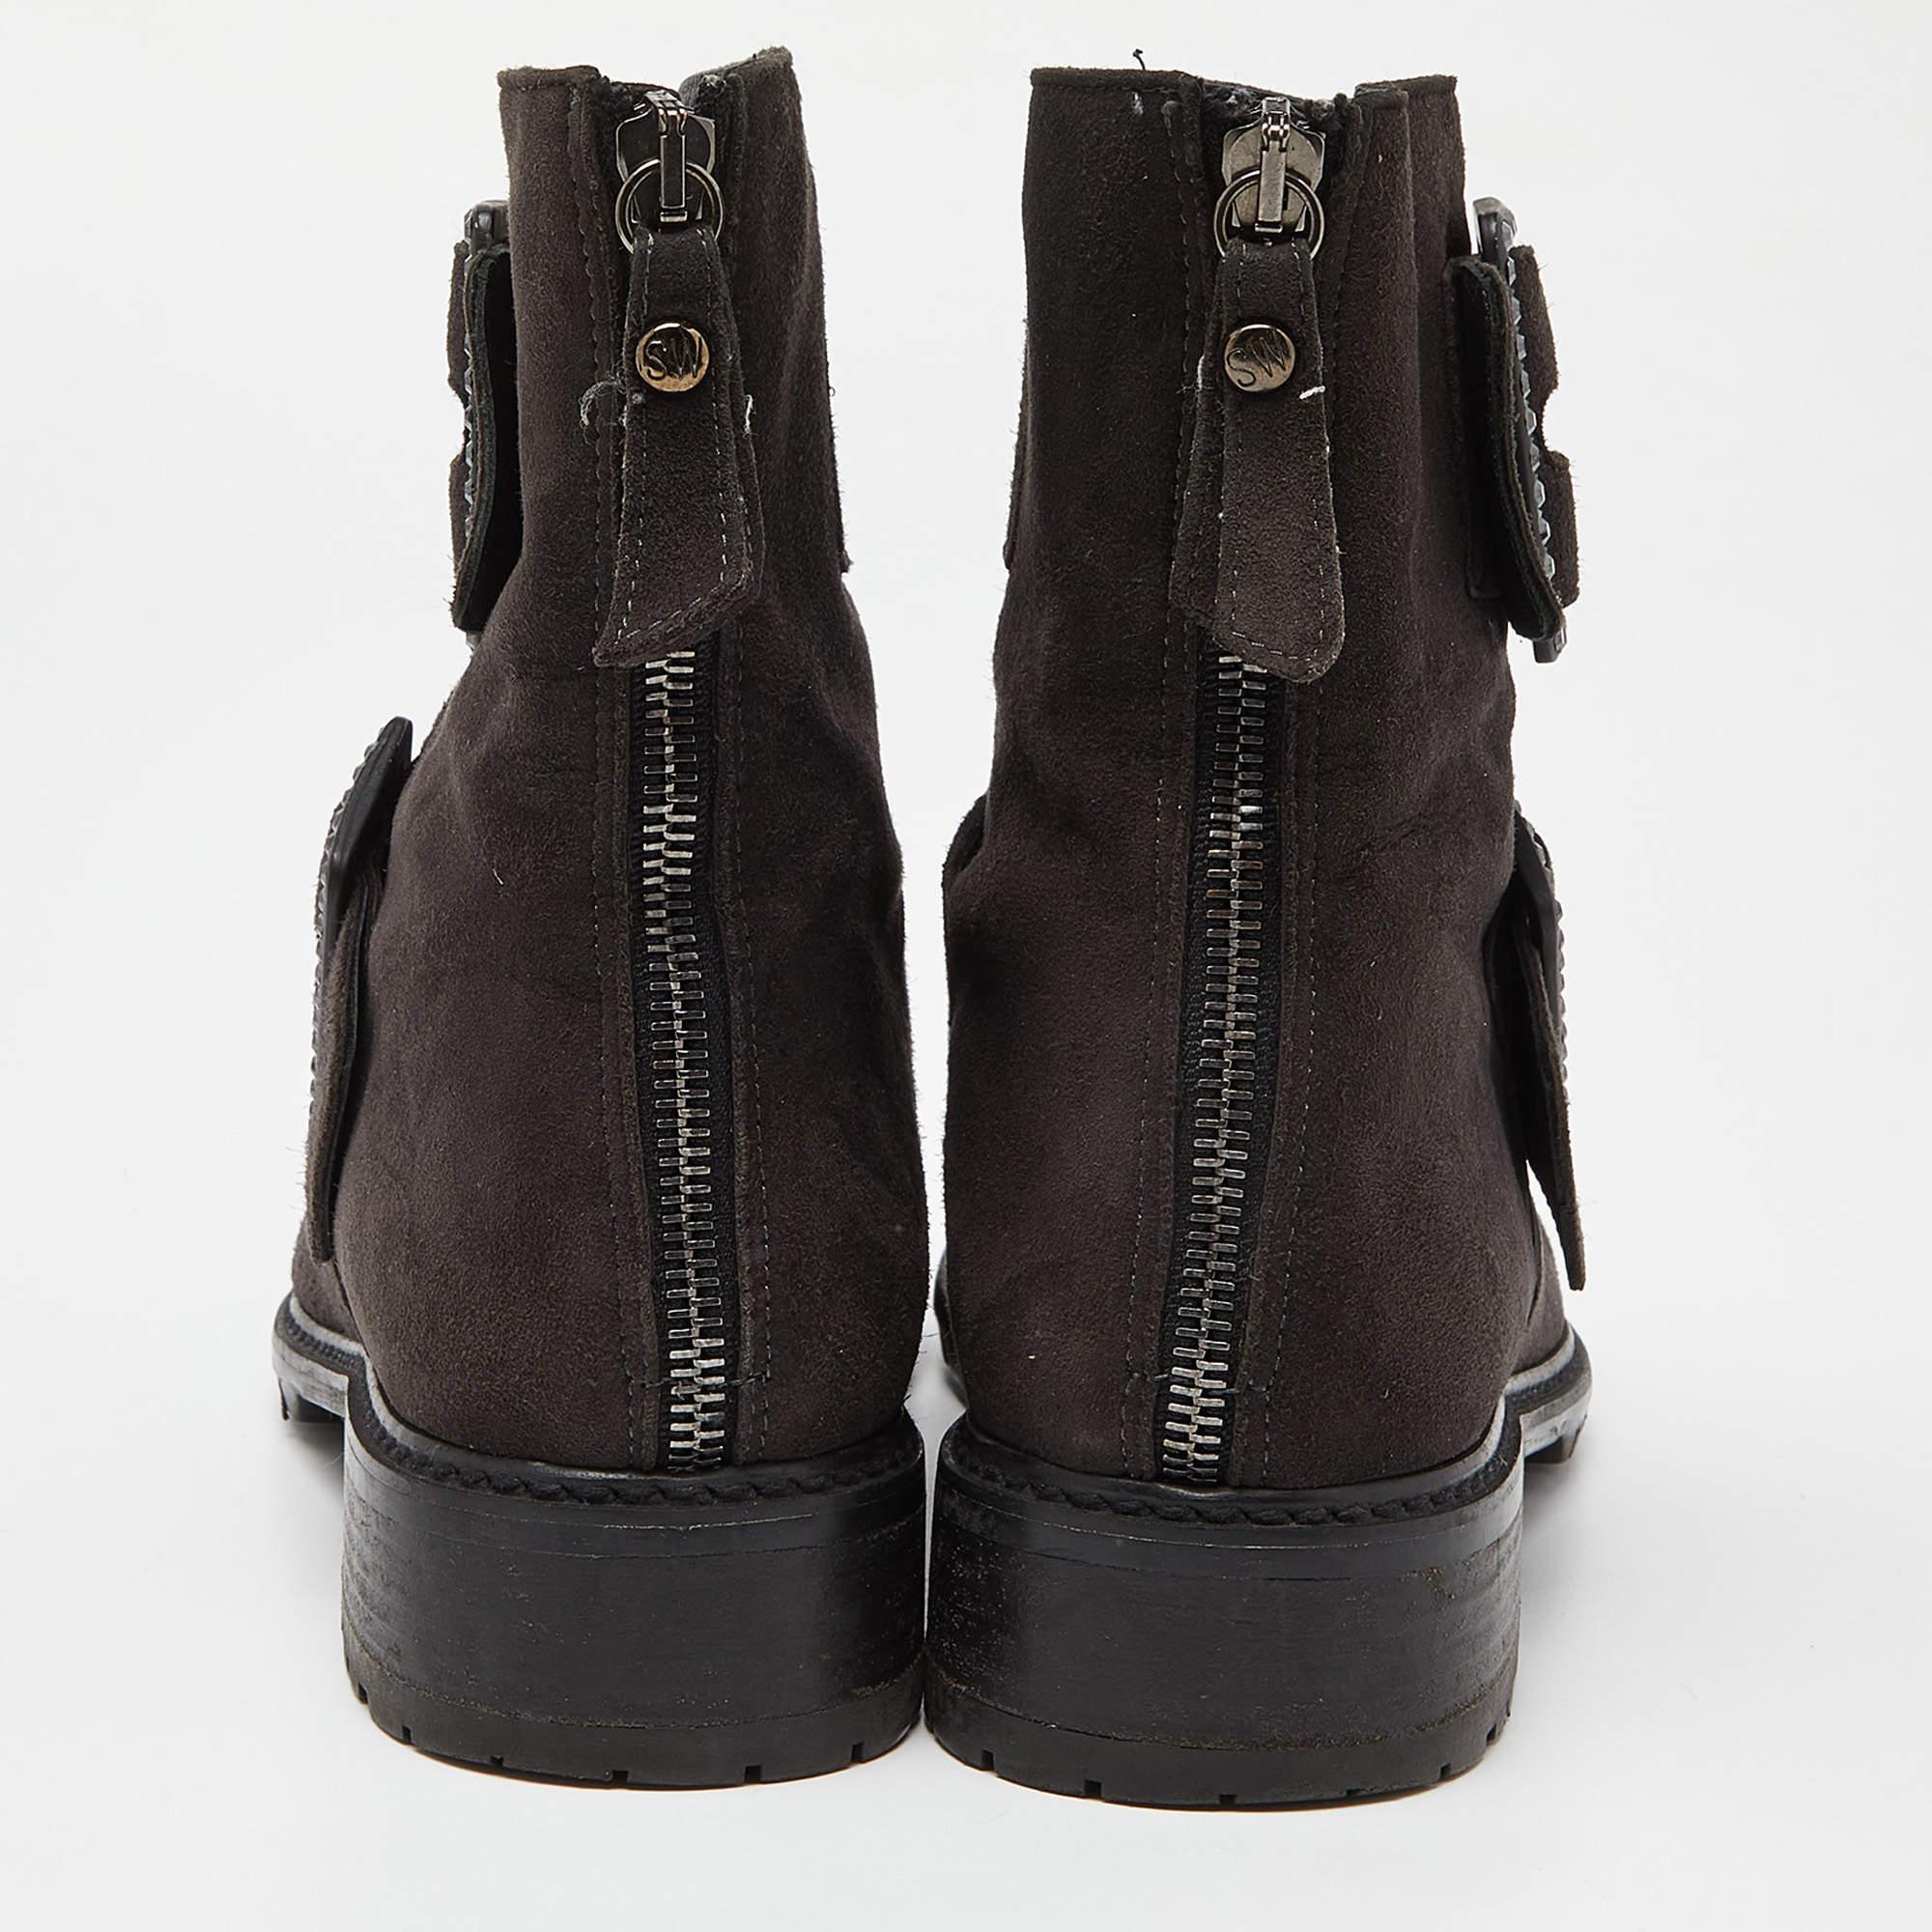 Stuart Weitzman Black Suede Crystal Embellished Ankle Length Boots Size 37.5 2